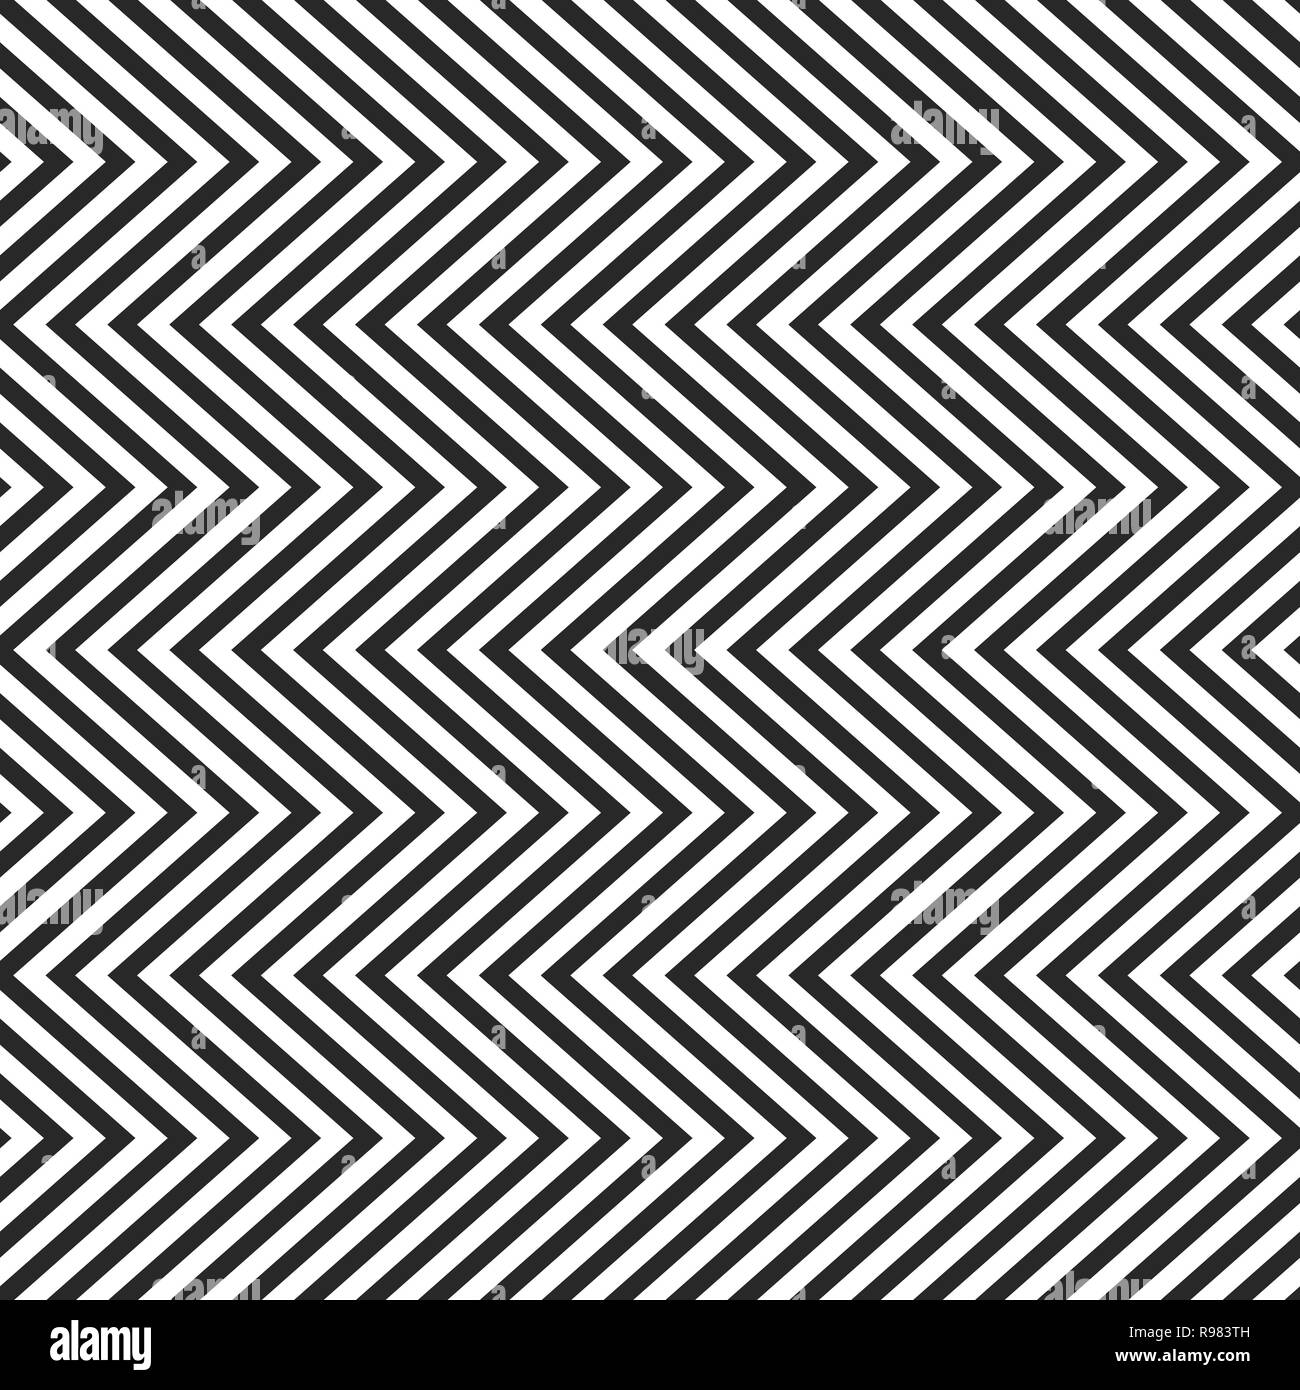 Resultado de imagem para pattern xadrez vetor  Black and white background,  Black and white wallpaper, Black and white photo wall